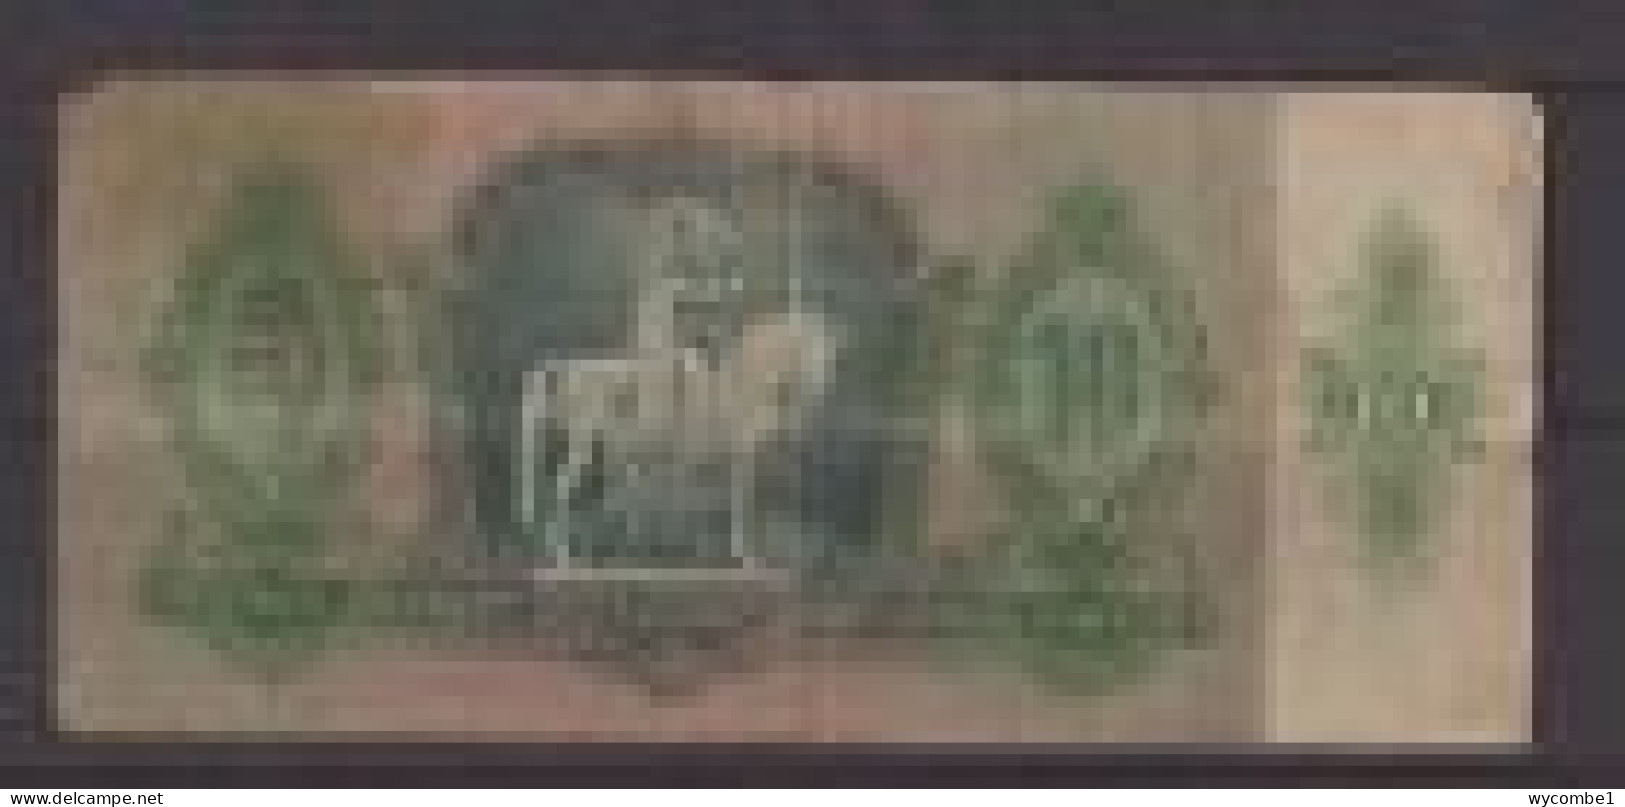 HUNGARY - 1936 10 Pengo Circulated Banknote - Hungría